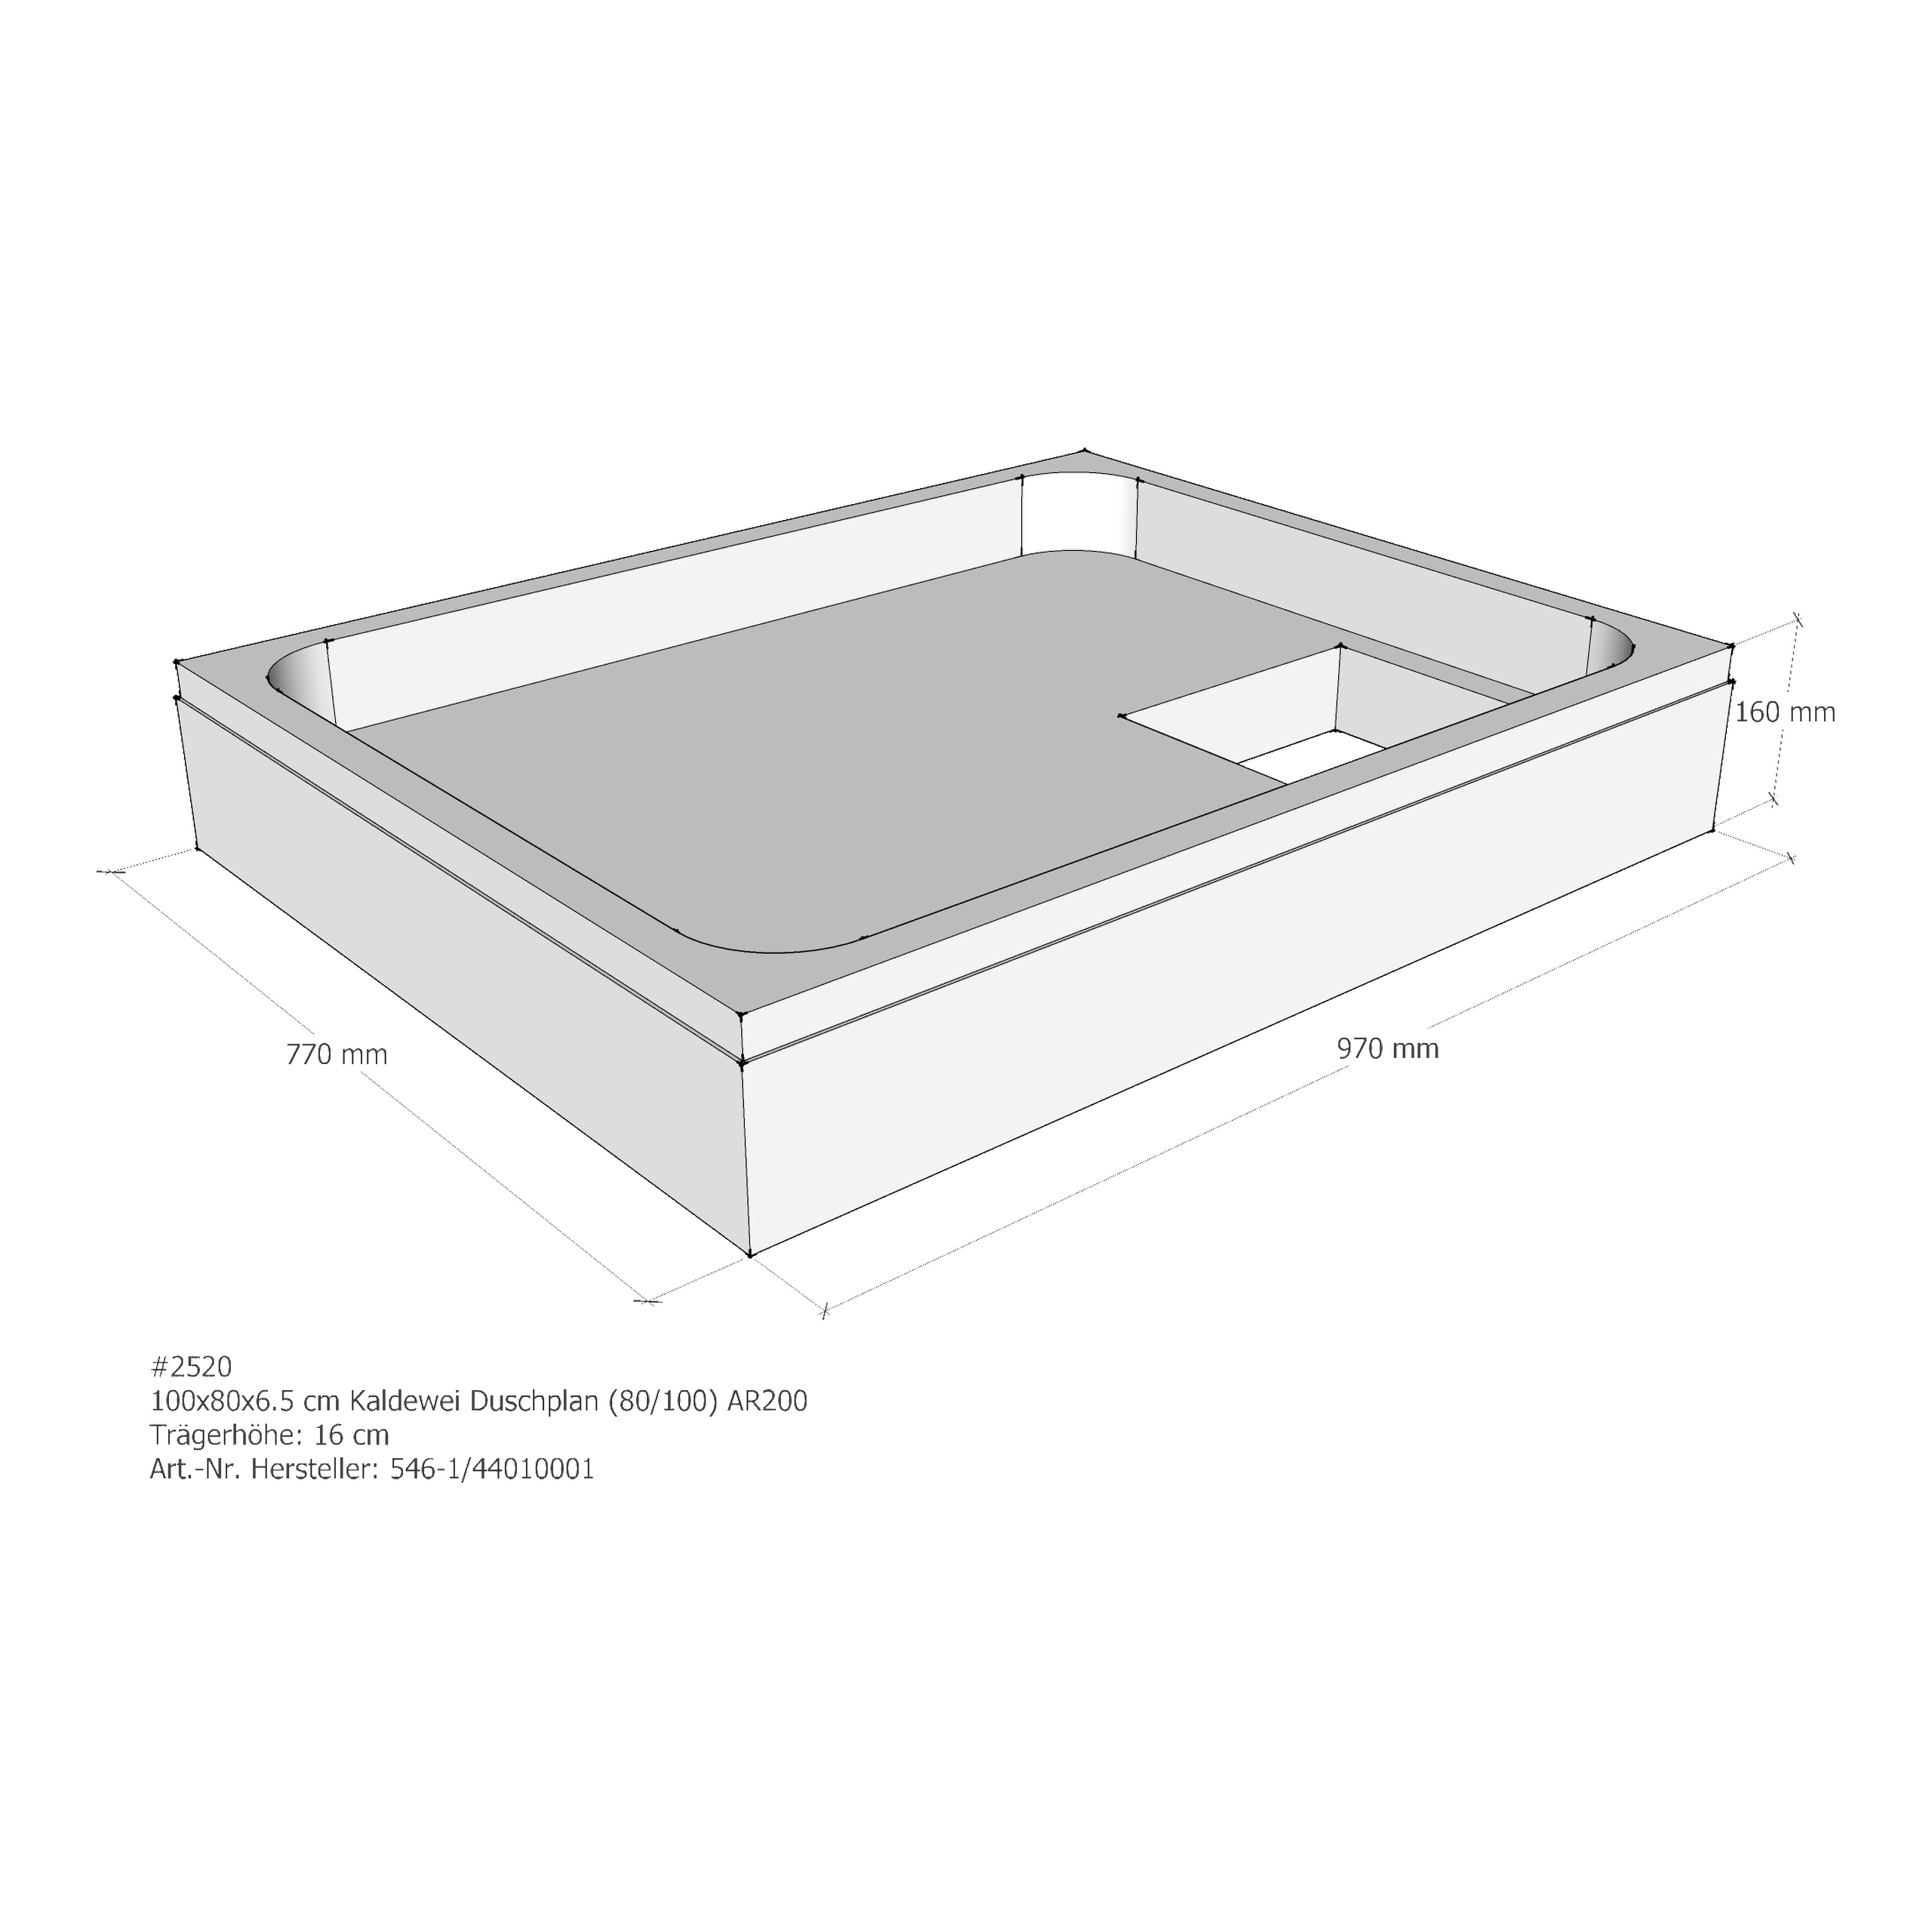 Duschwannenträger für Kaldewei Duschplan 100 × 80 × 6,5 cm